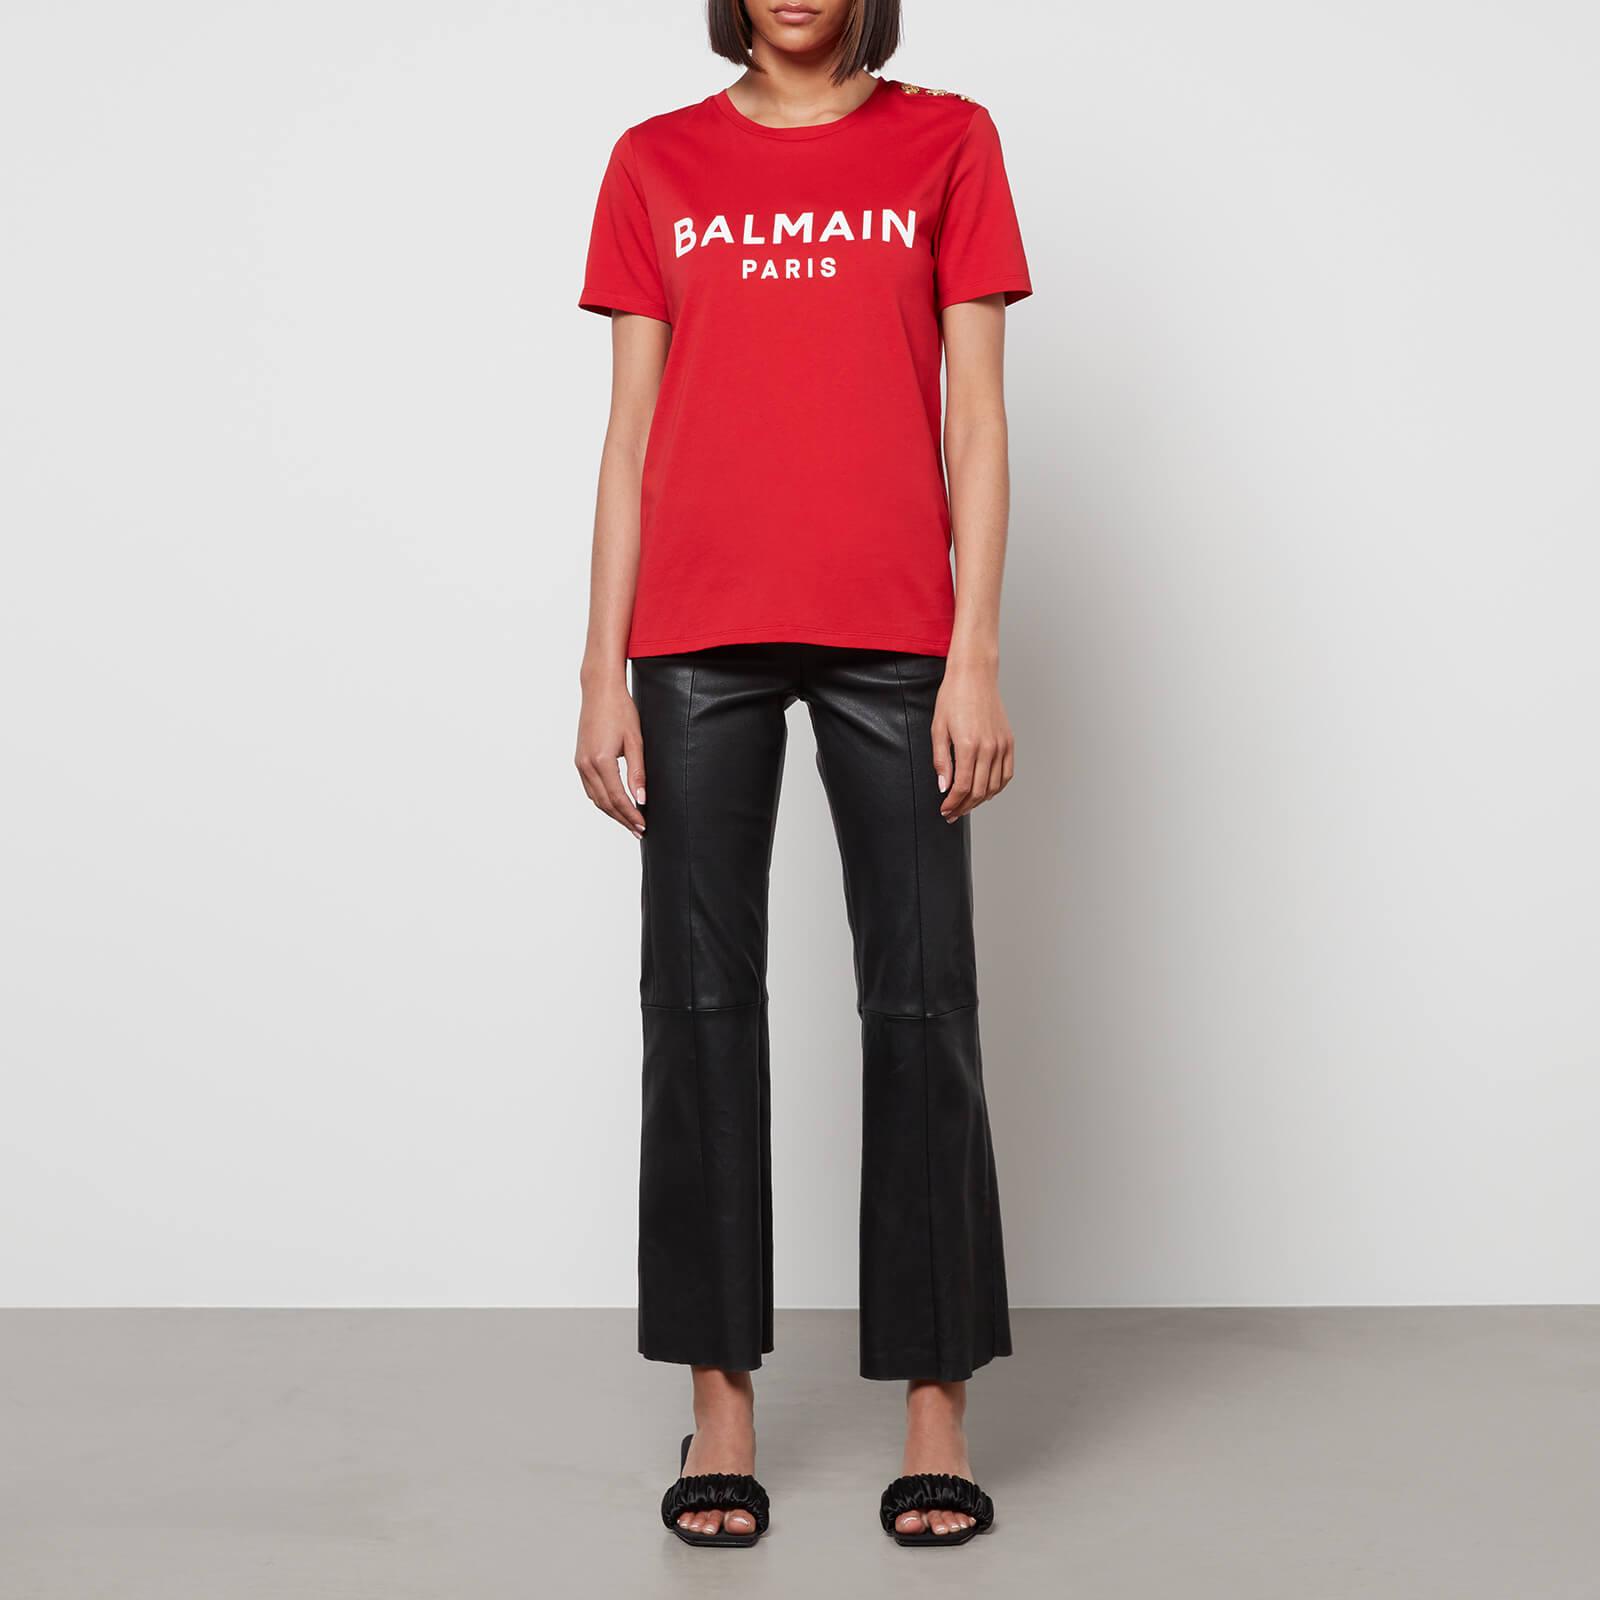 Balmain Short 3 Button Printed T-shirt in Red | Lyst